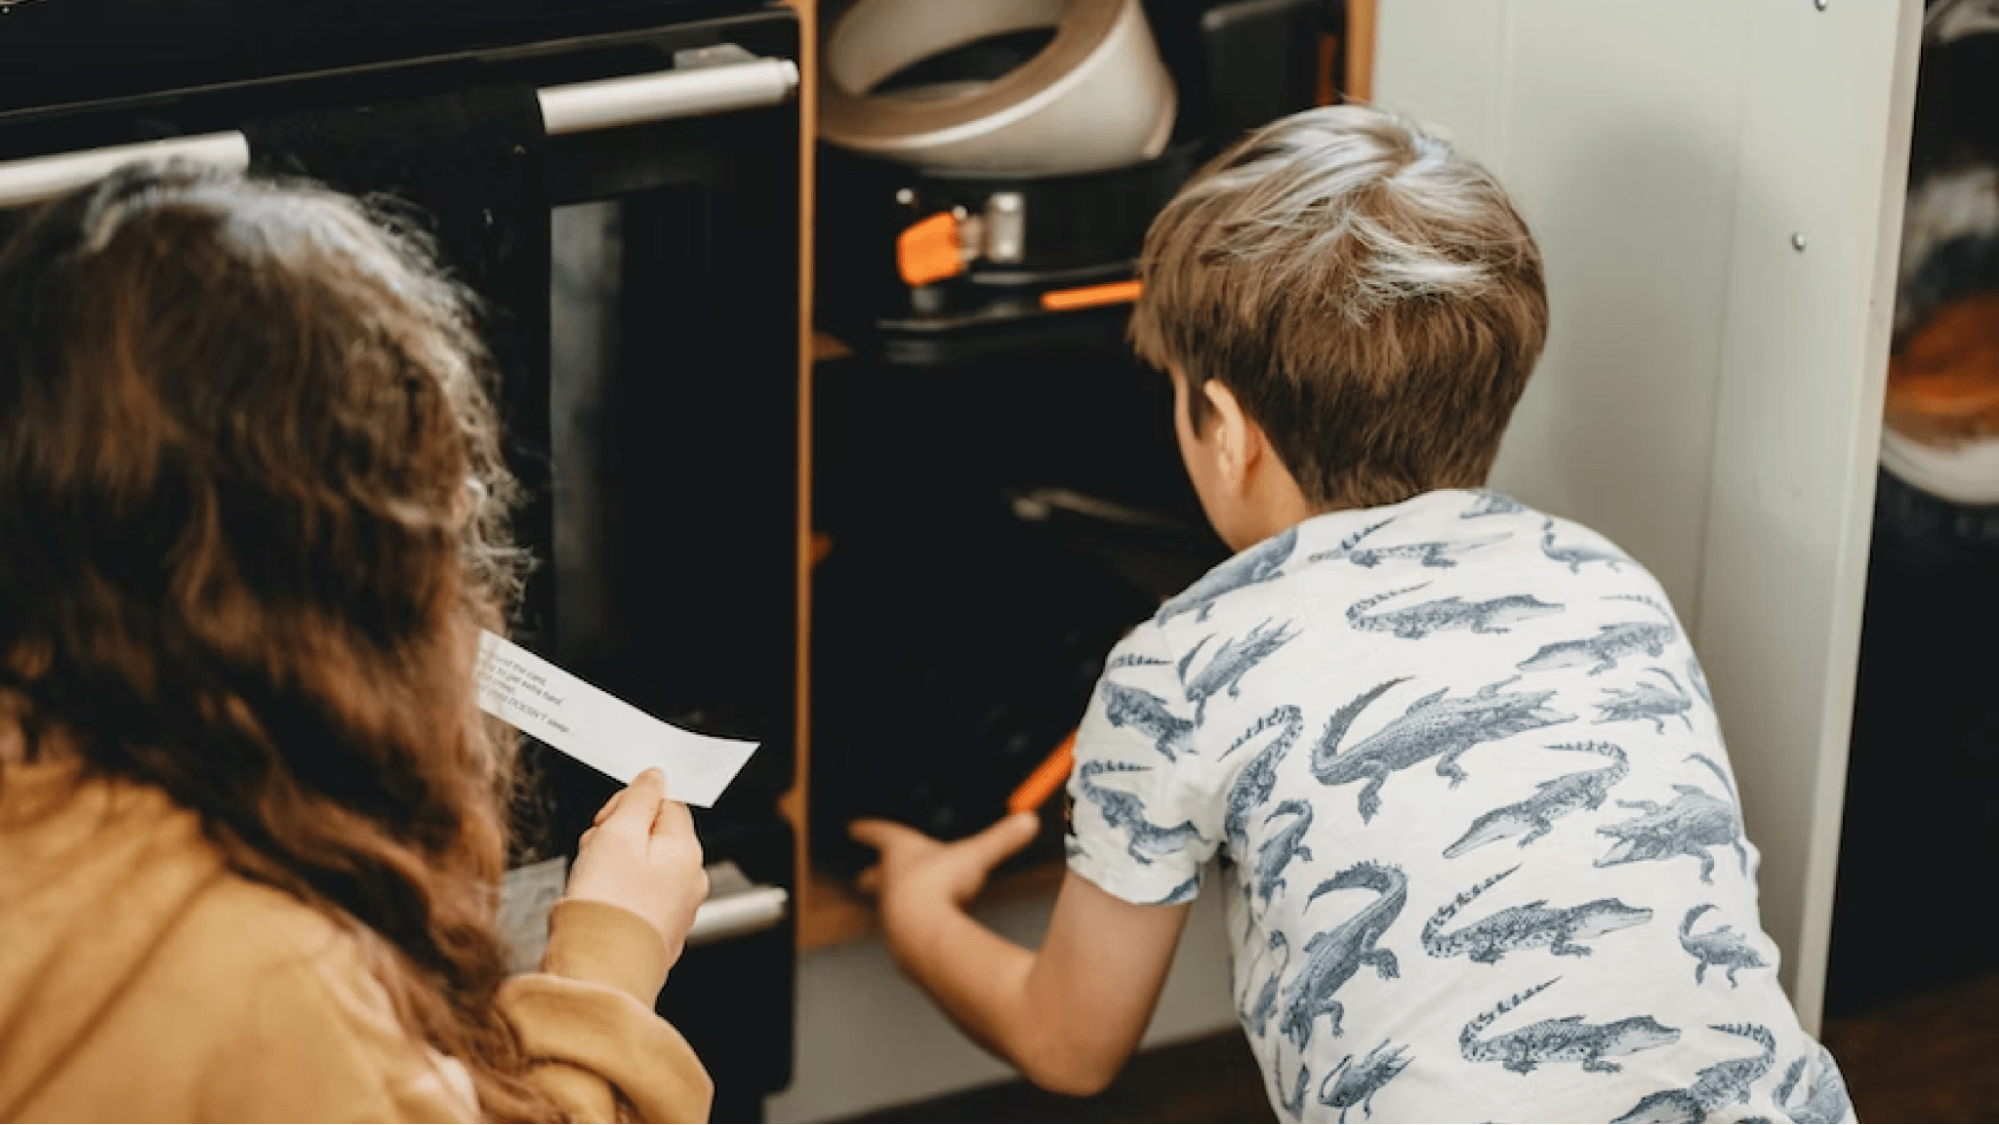 Two children find scavenger hunt clue in cupboard